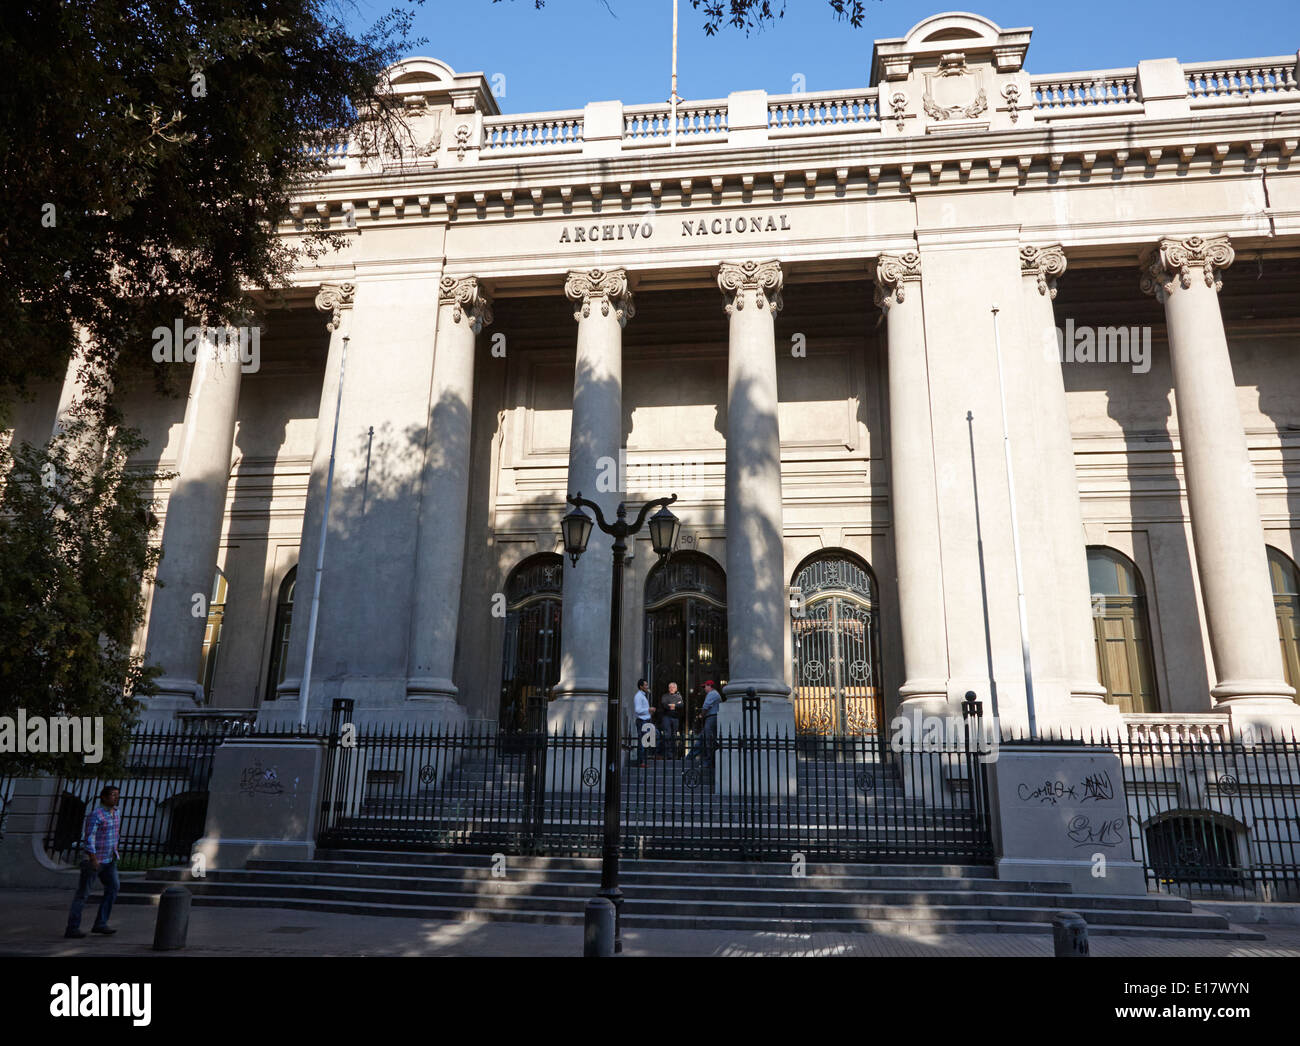 archivo nacional national archives building Santiago Chile Stock Photo -  Alamy